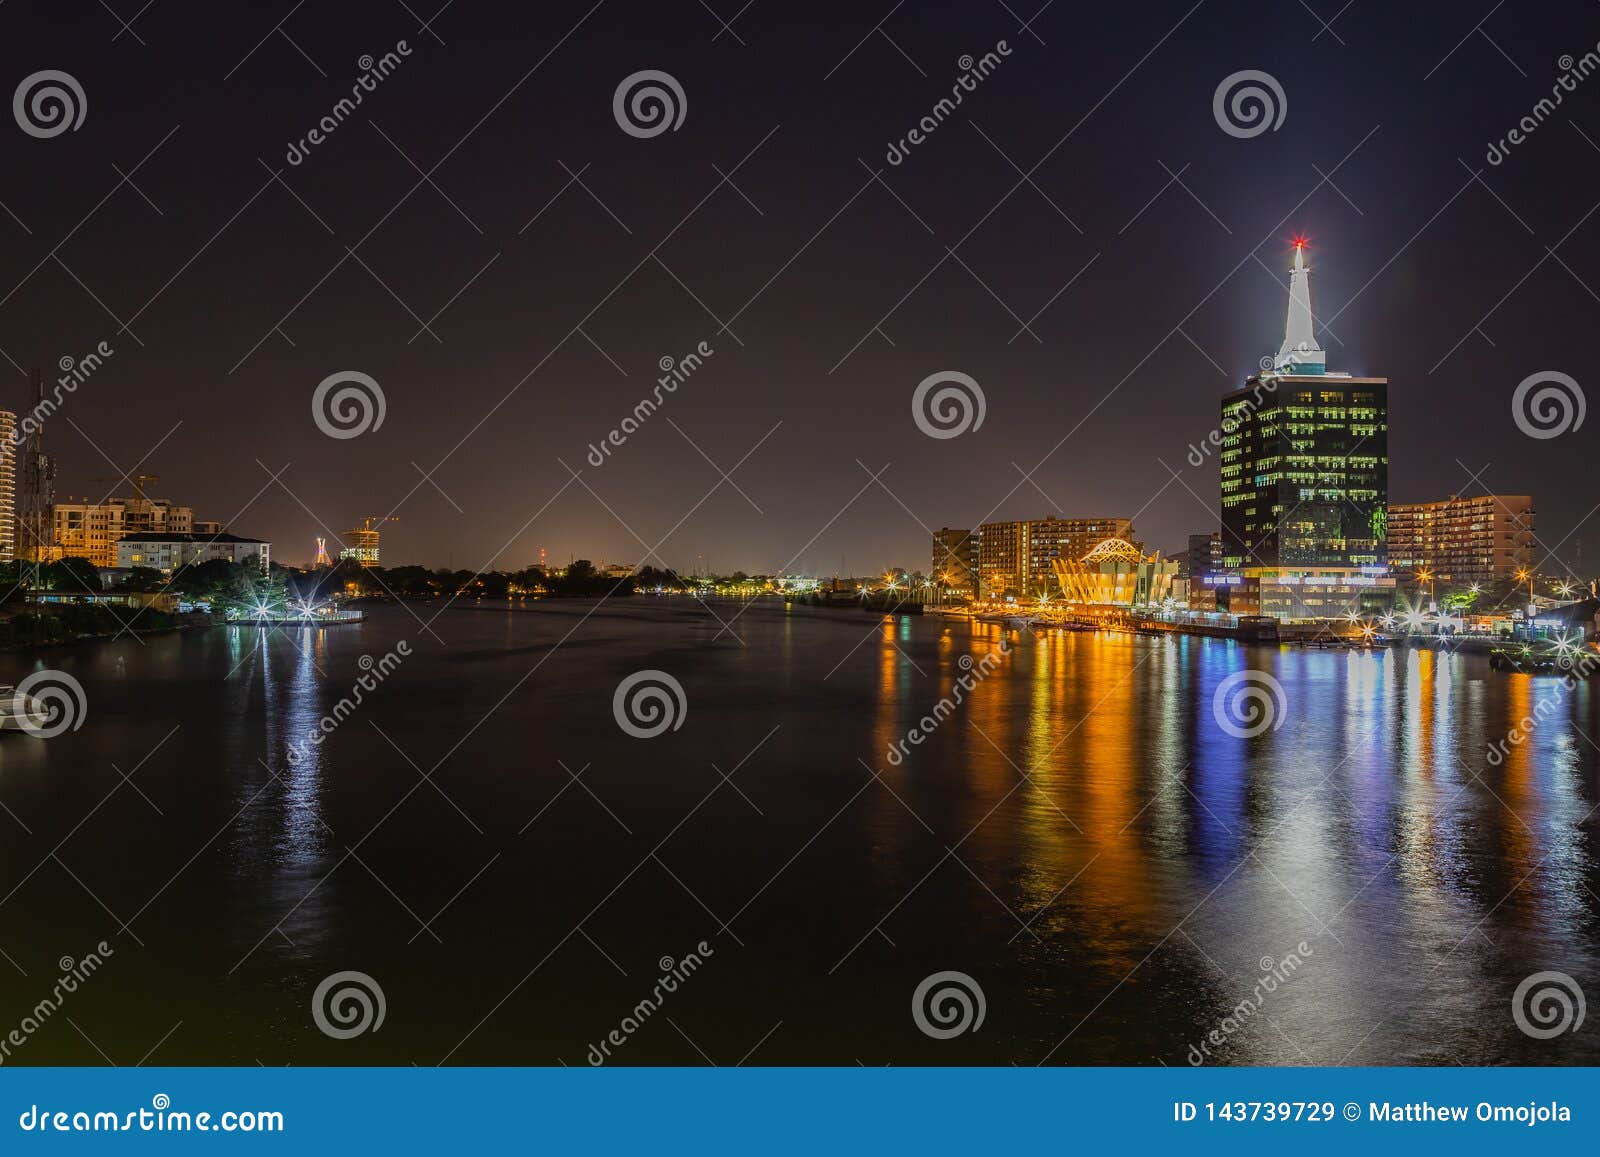 night scene of the civic center towers victoria island, lagos nigeria